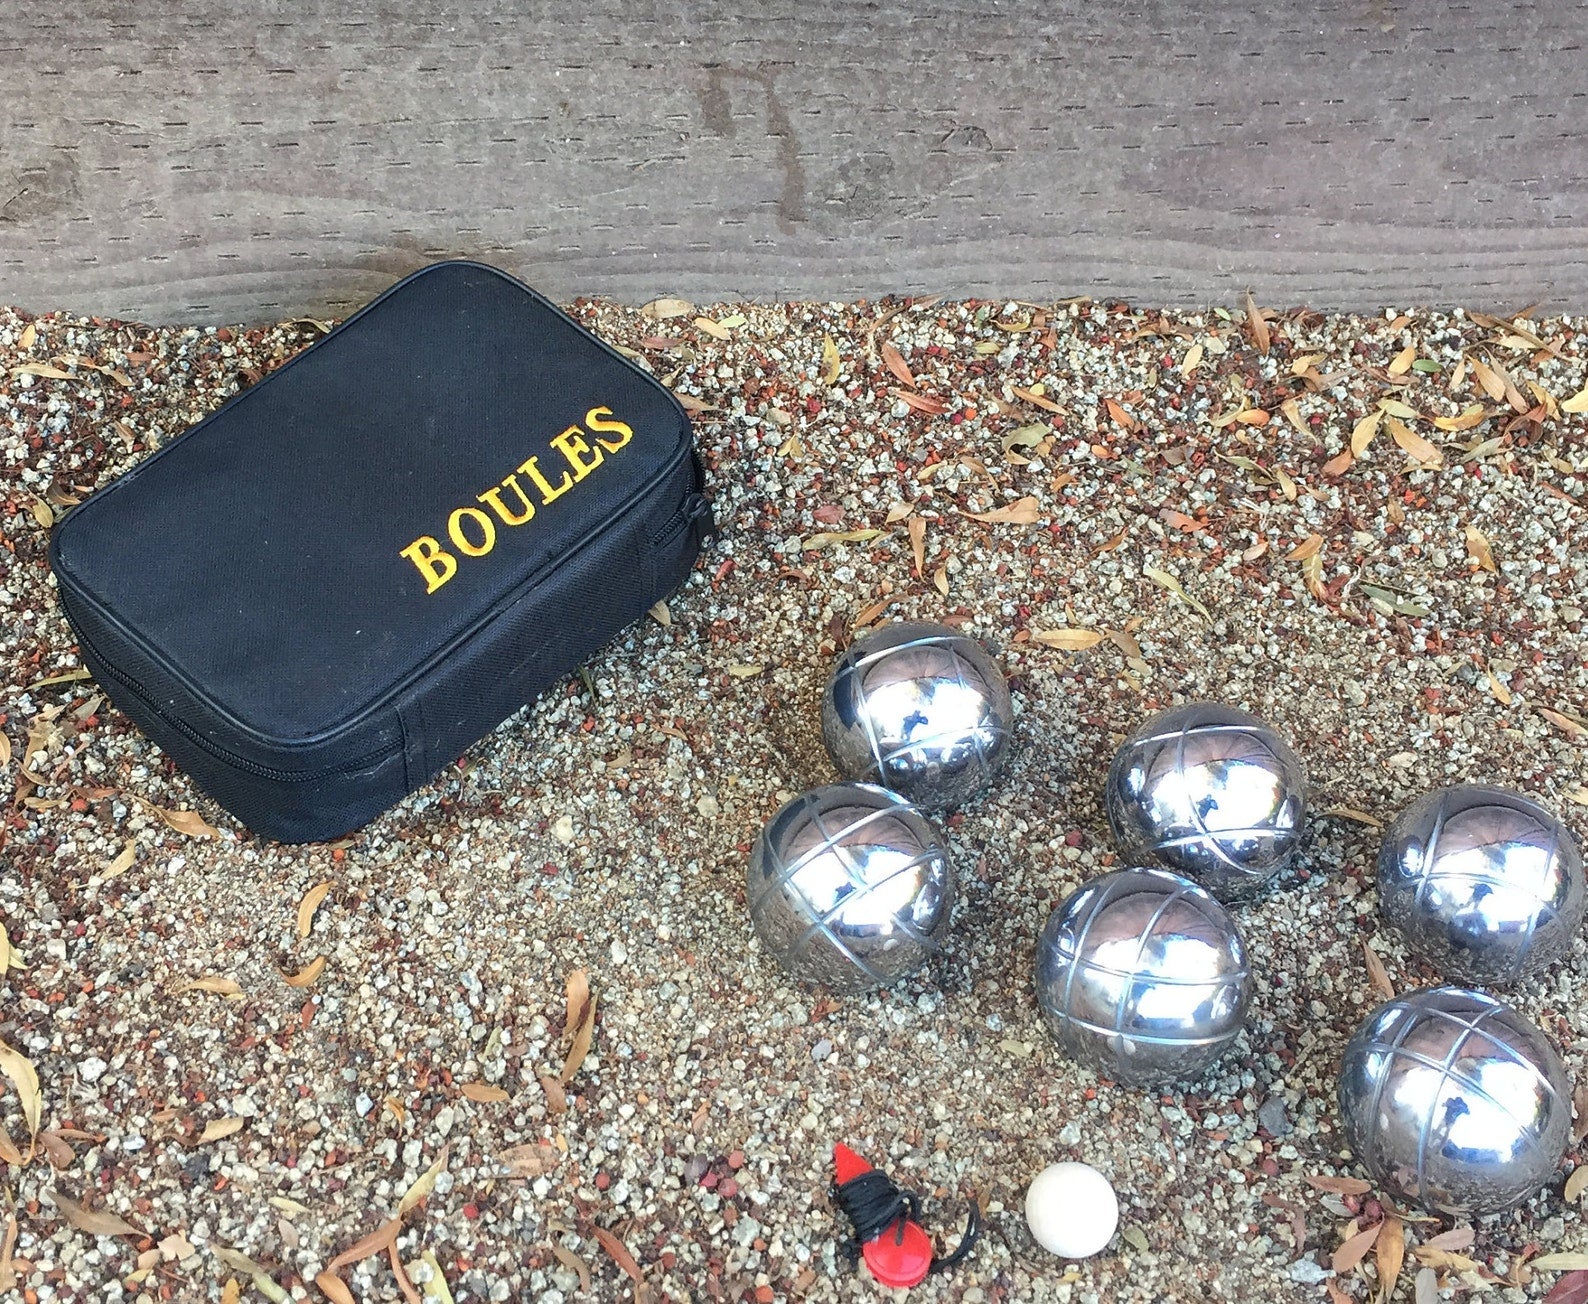 Relaxdays Boule Set of 6 Metal Balls